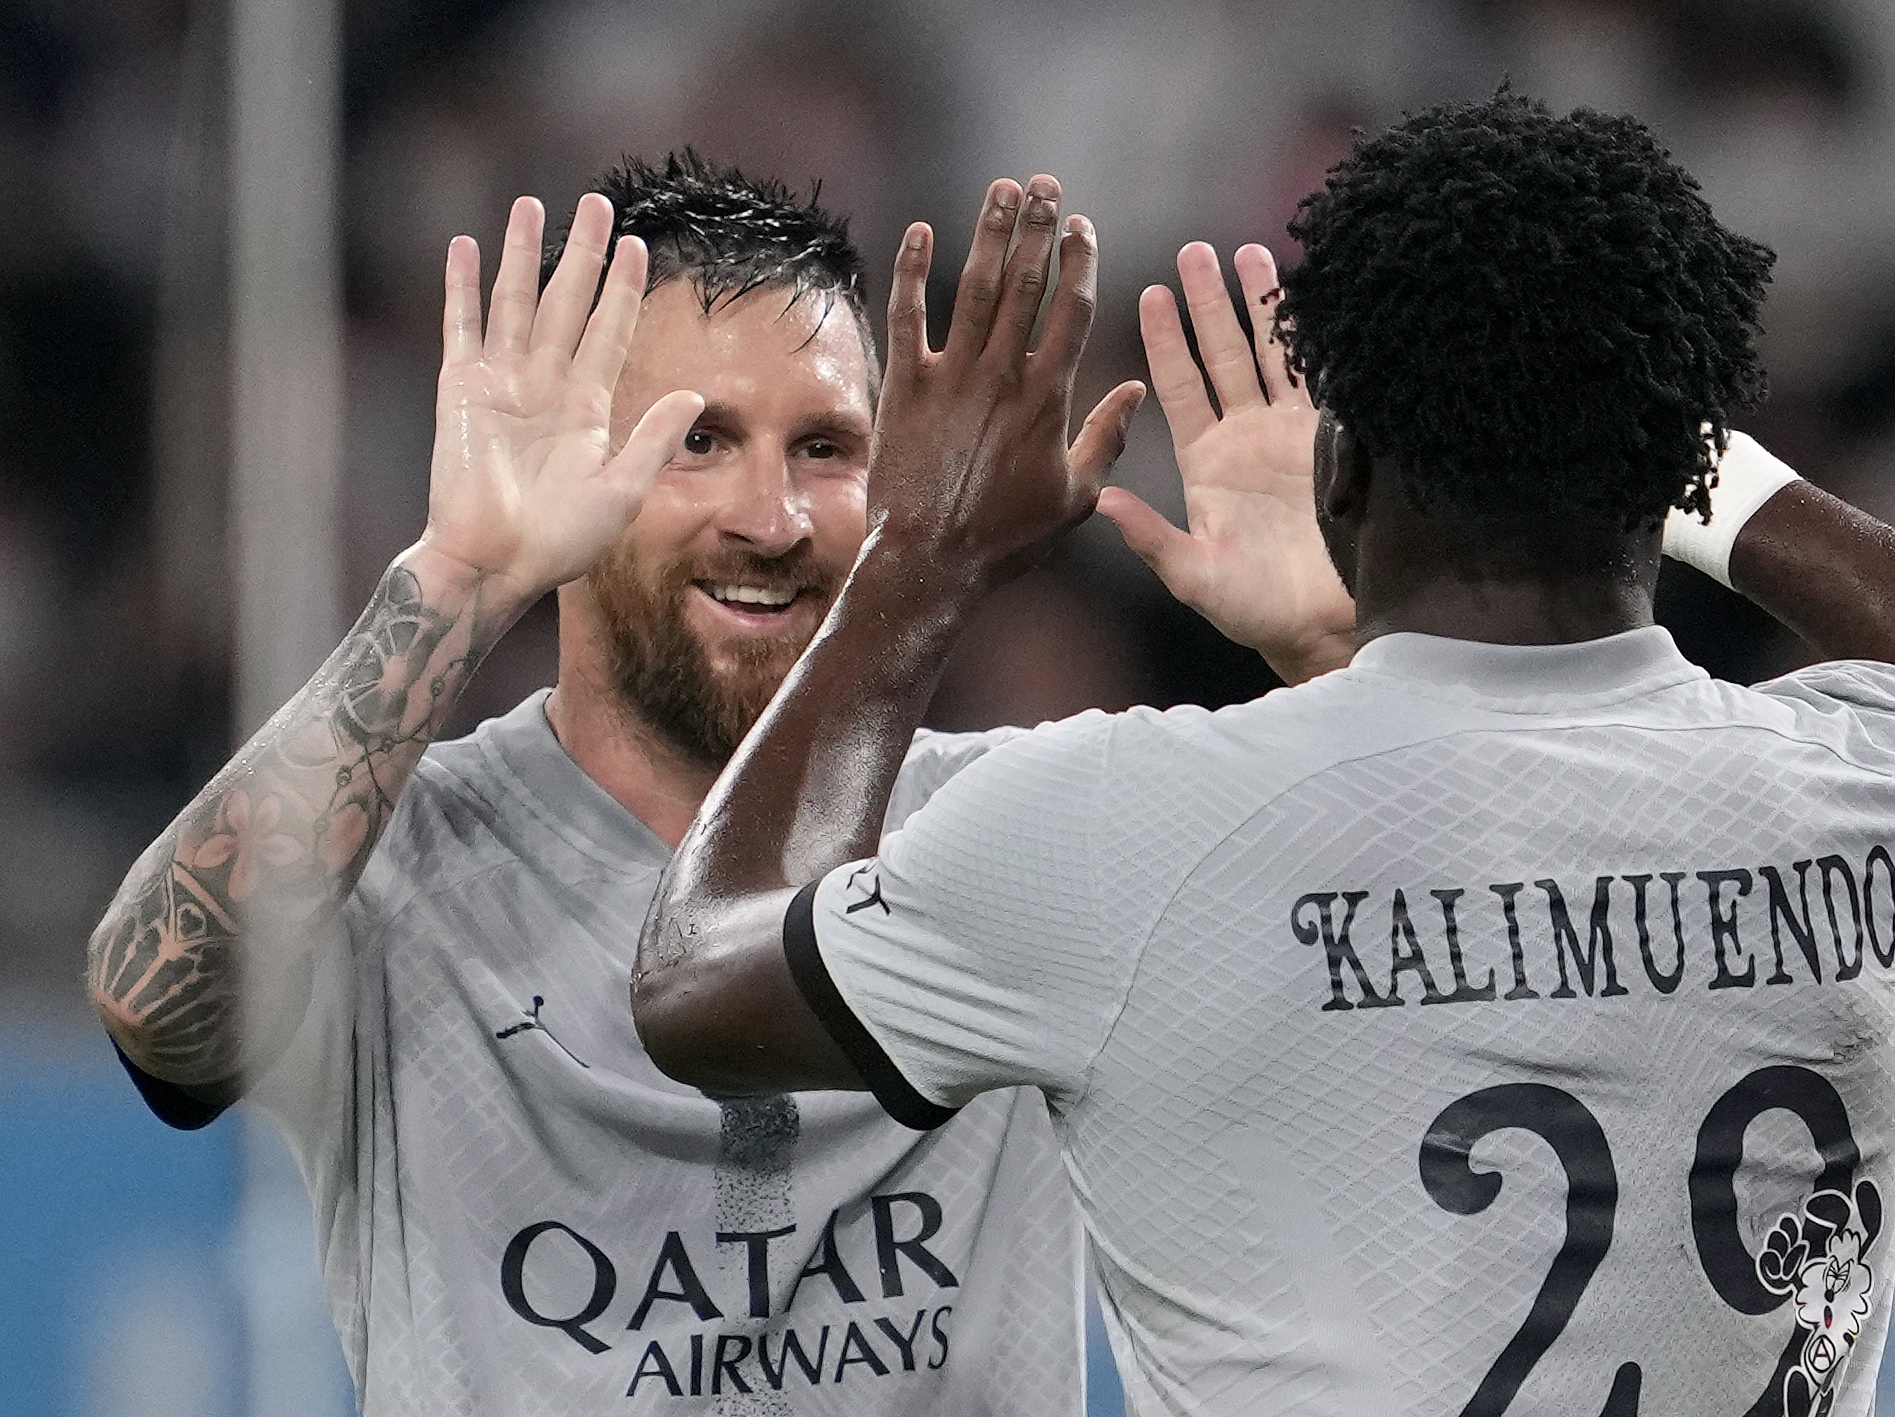 Con gol de Lionel Messi, PSG se encamina victoria ante Kawasaki Frontale